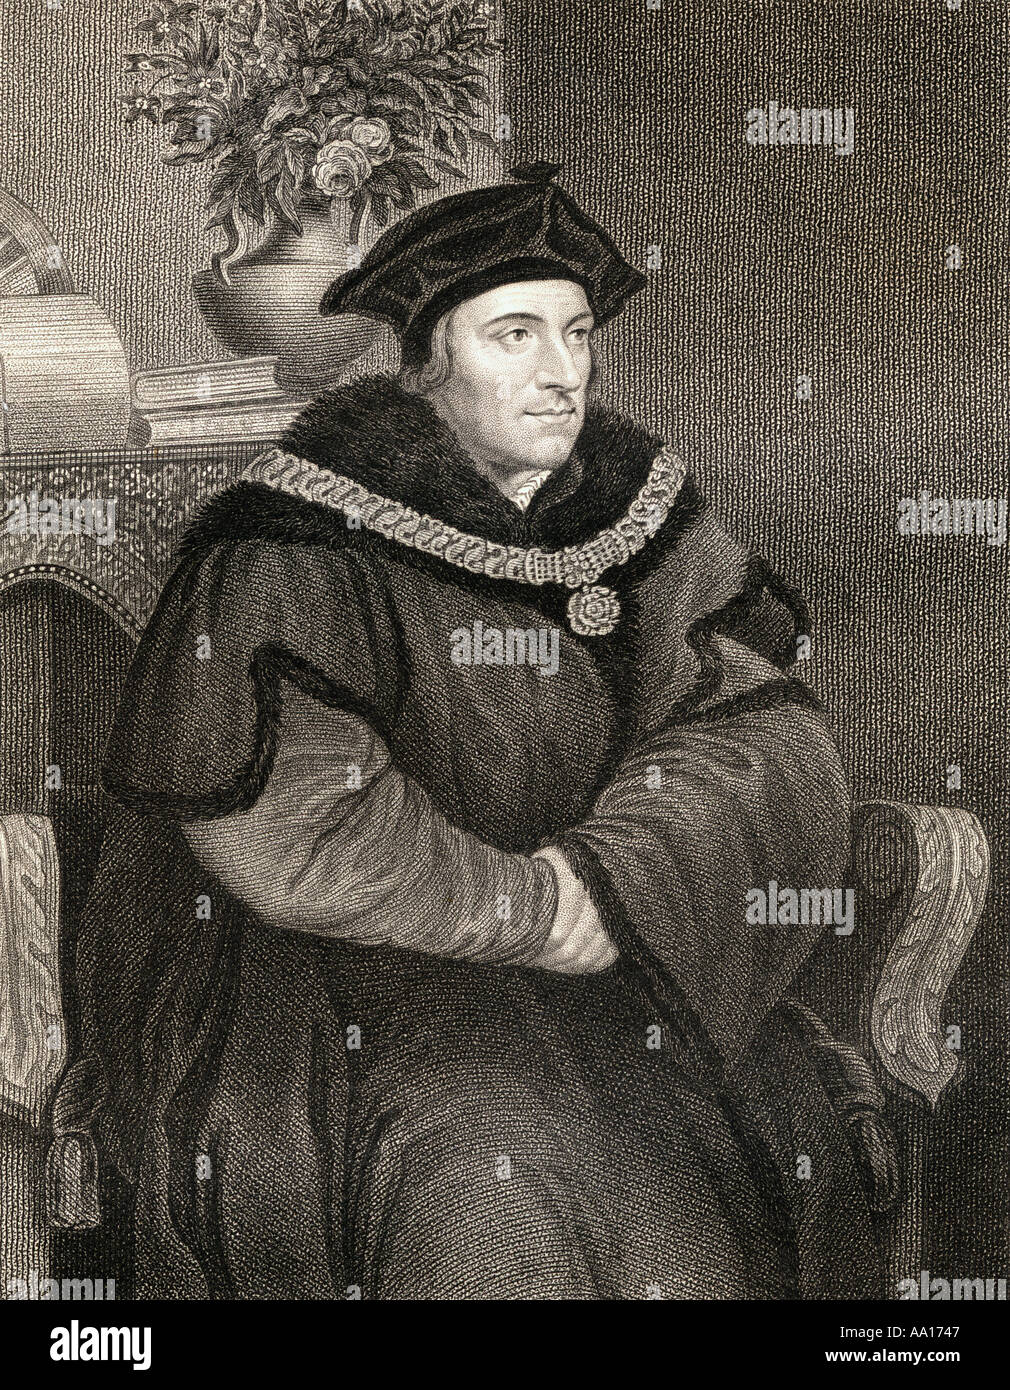 Sir Thomas More, aka Saint Thomas More, 1478 -1535. English lawyer, social philosopher, author, statesman, and noted Renaissance humanist. Stock Photo